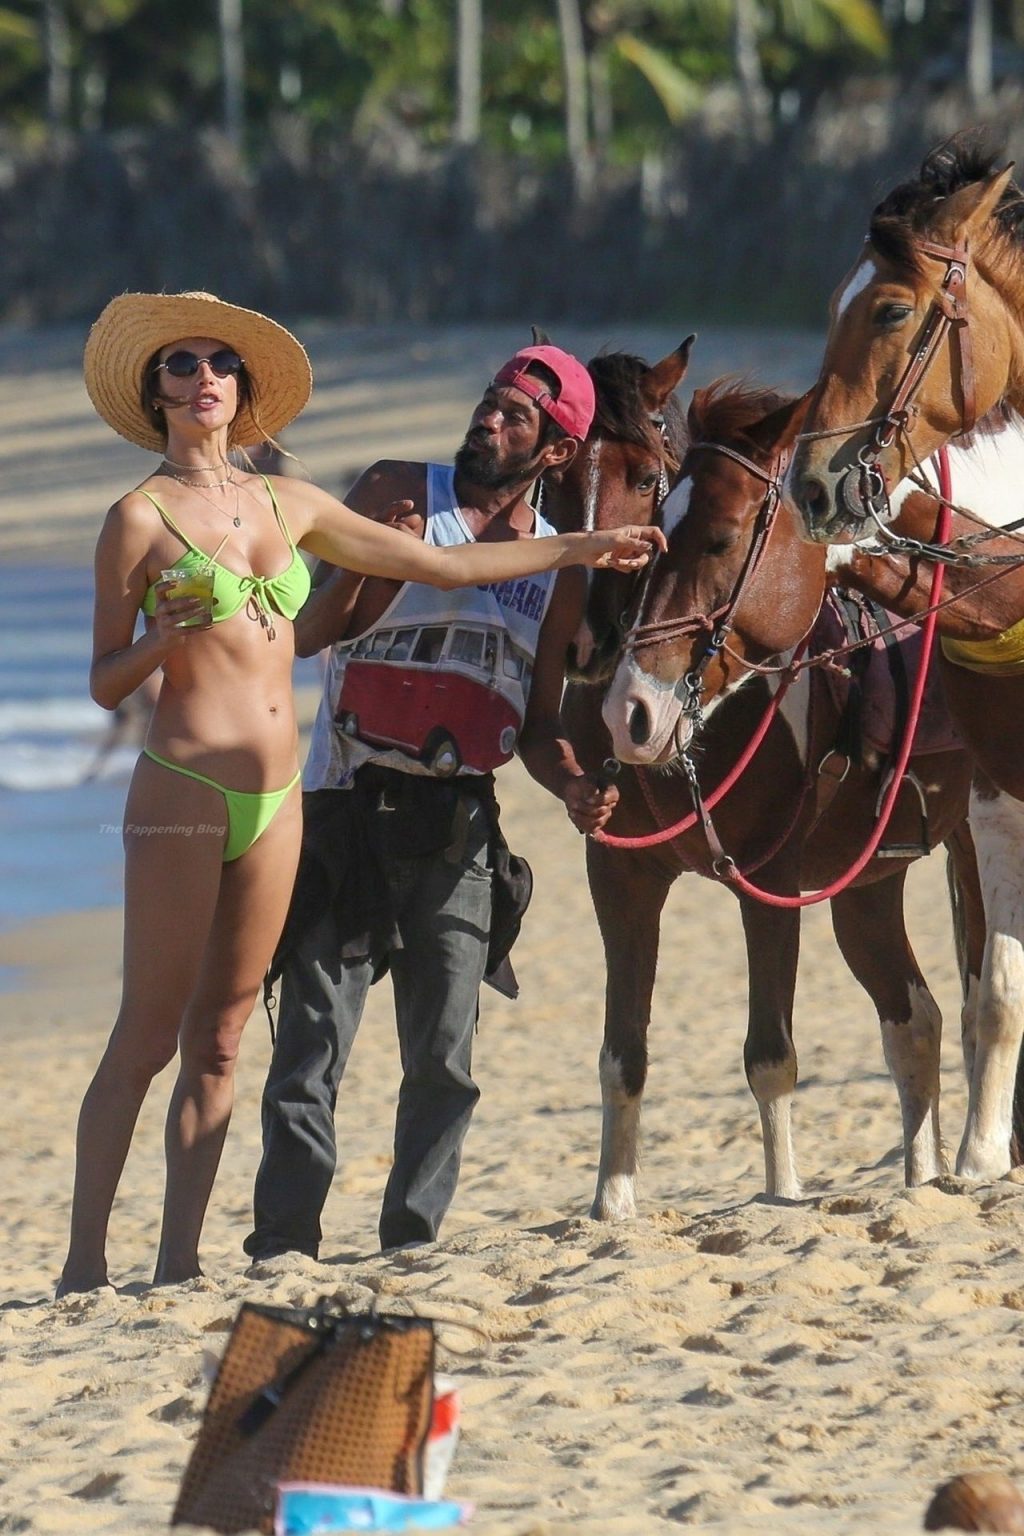 Alessandra Ambrosio Rocks a Tiny Bikini While Posing with Her Boyfriend (106 Photos) [Updated]